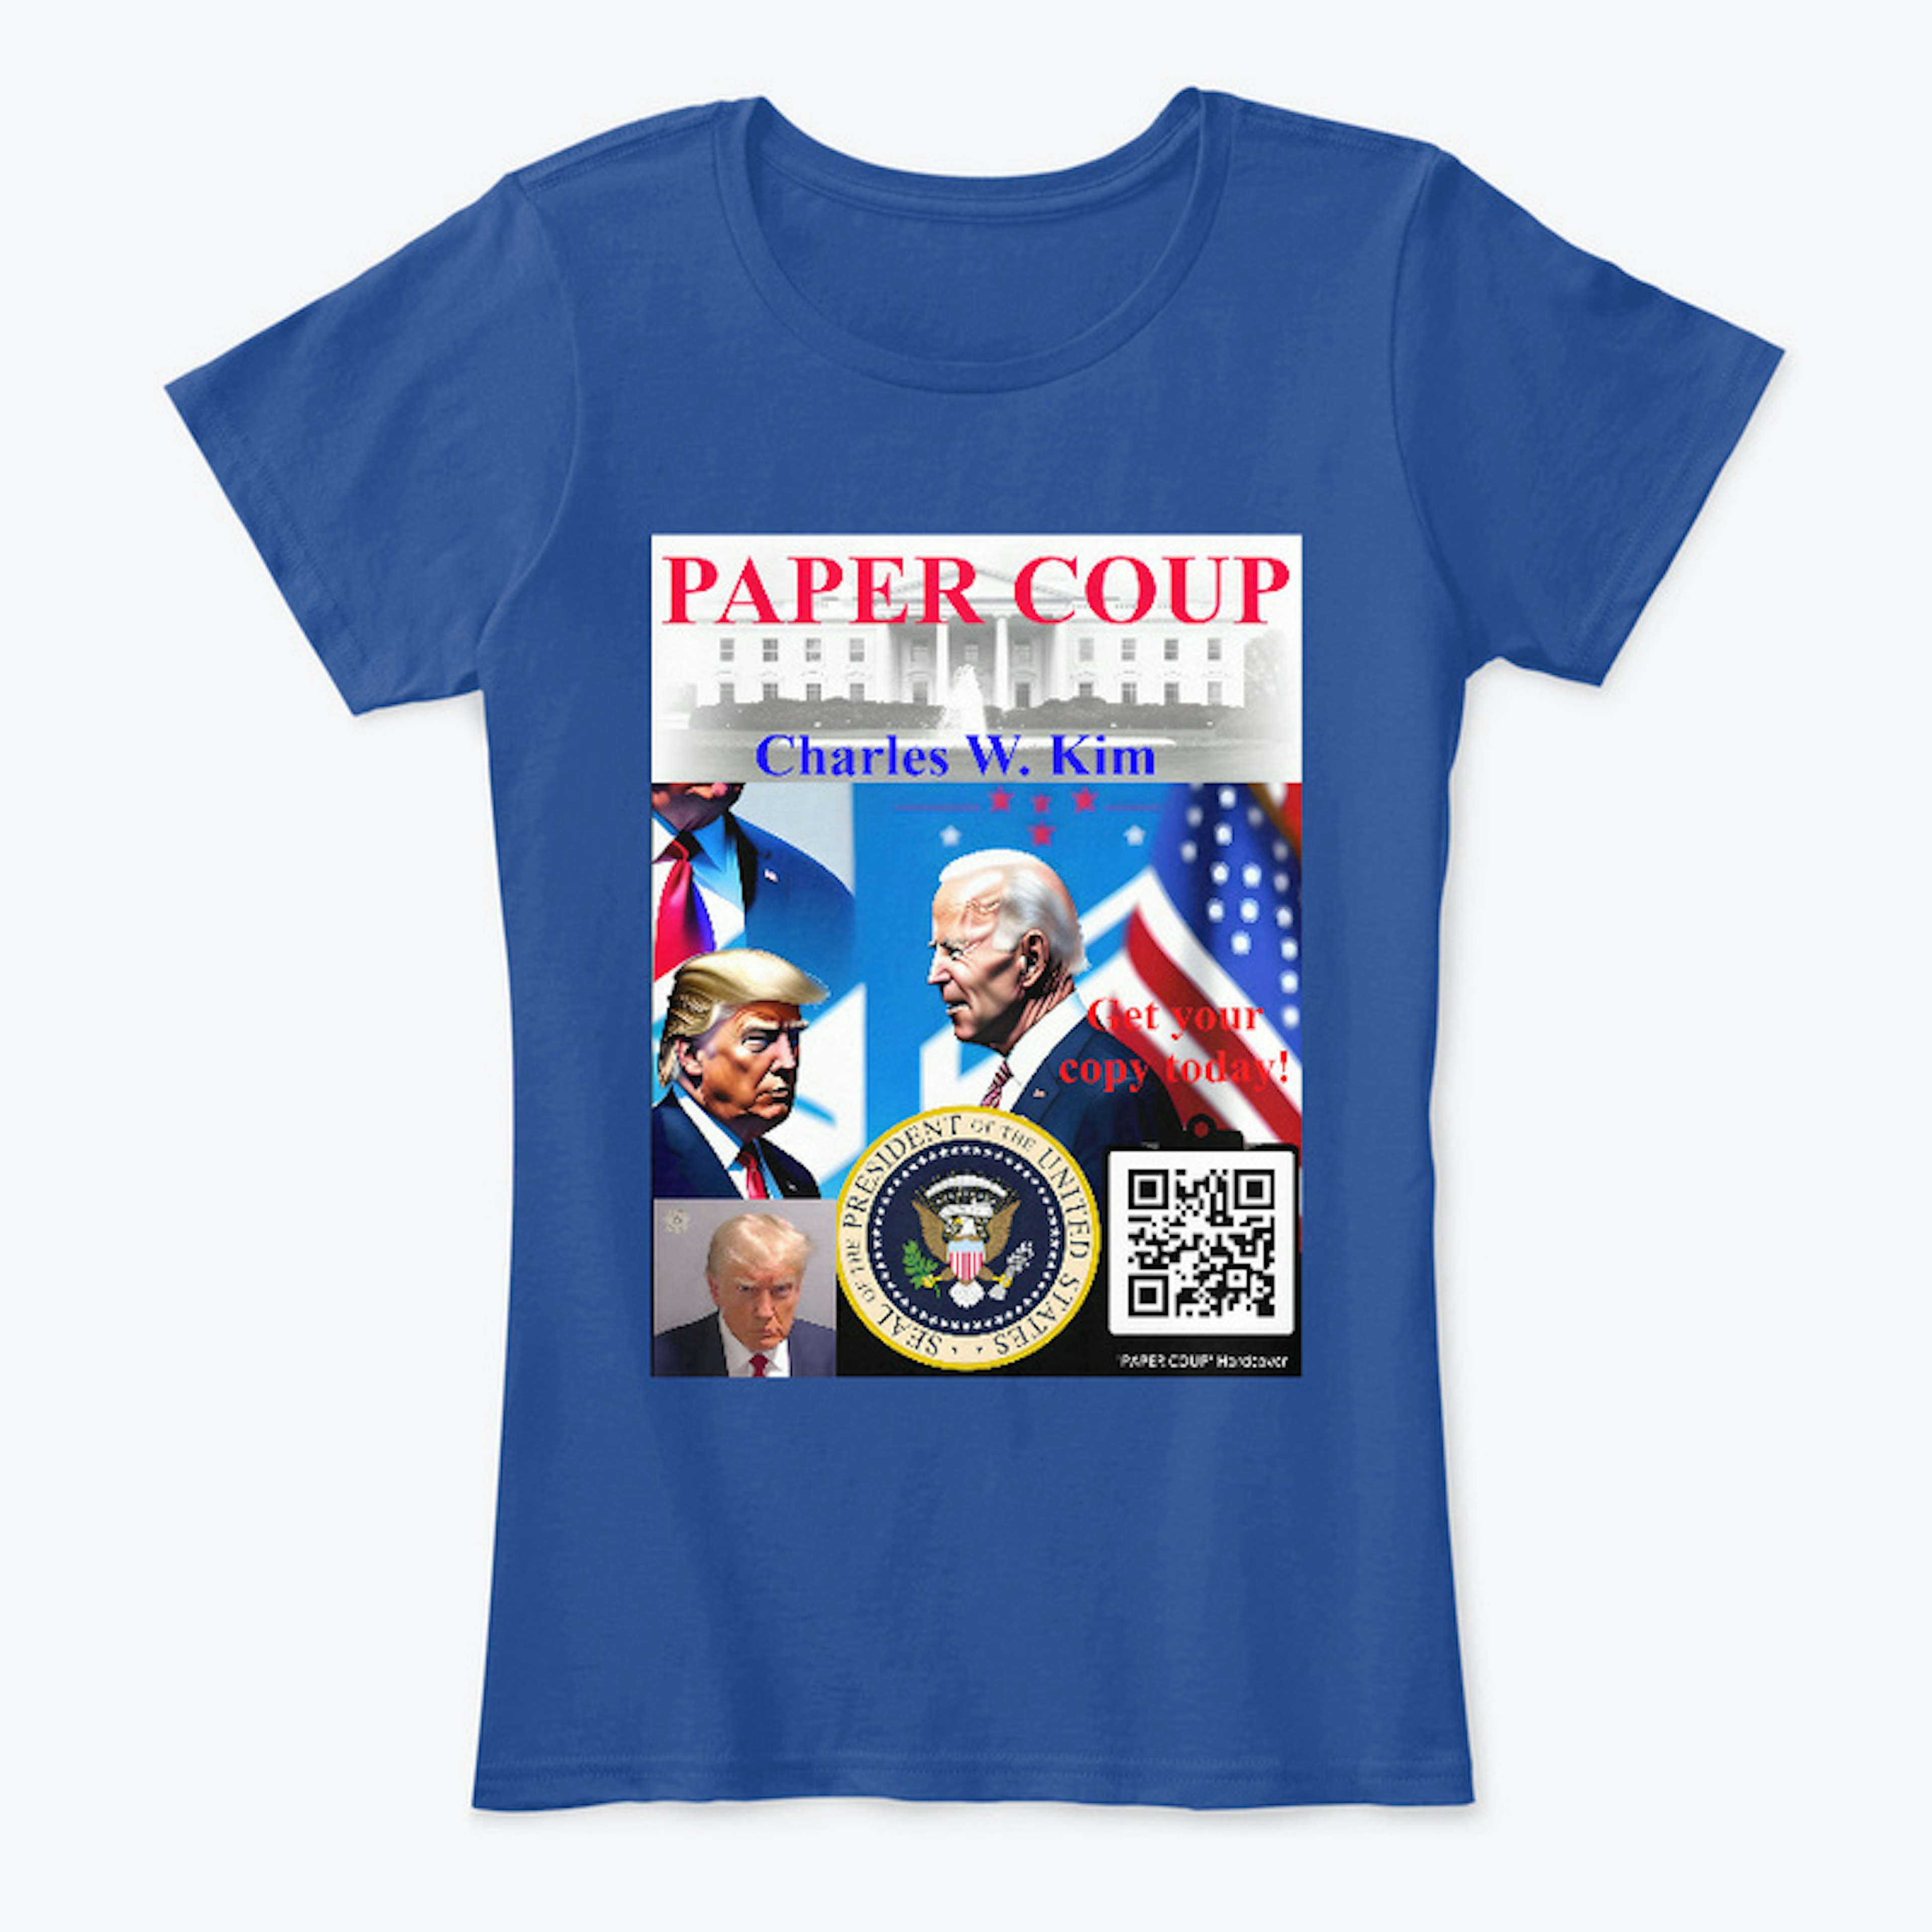 Paper Coup Merchandise